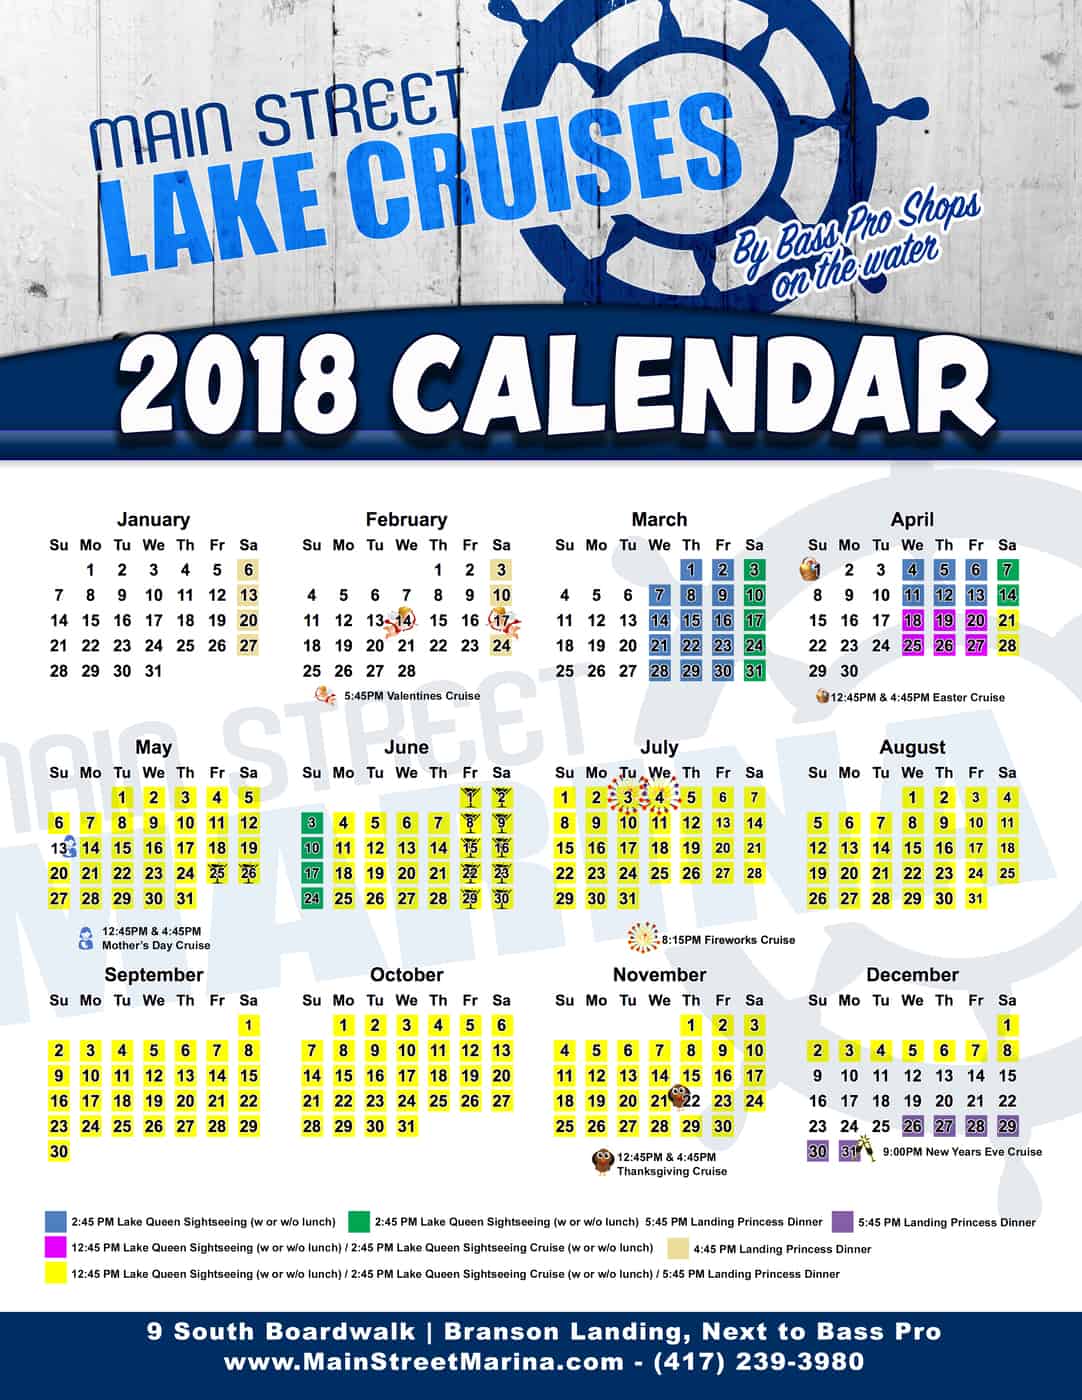 Main Street Lake Cruises 2018 Calendar